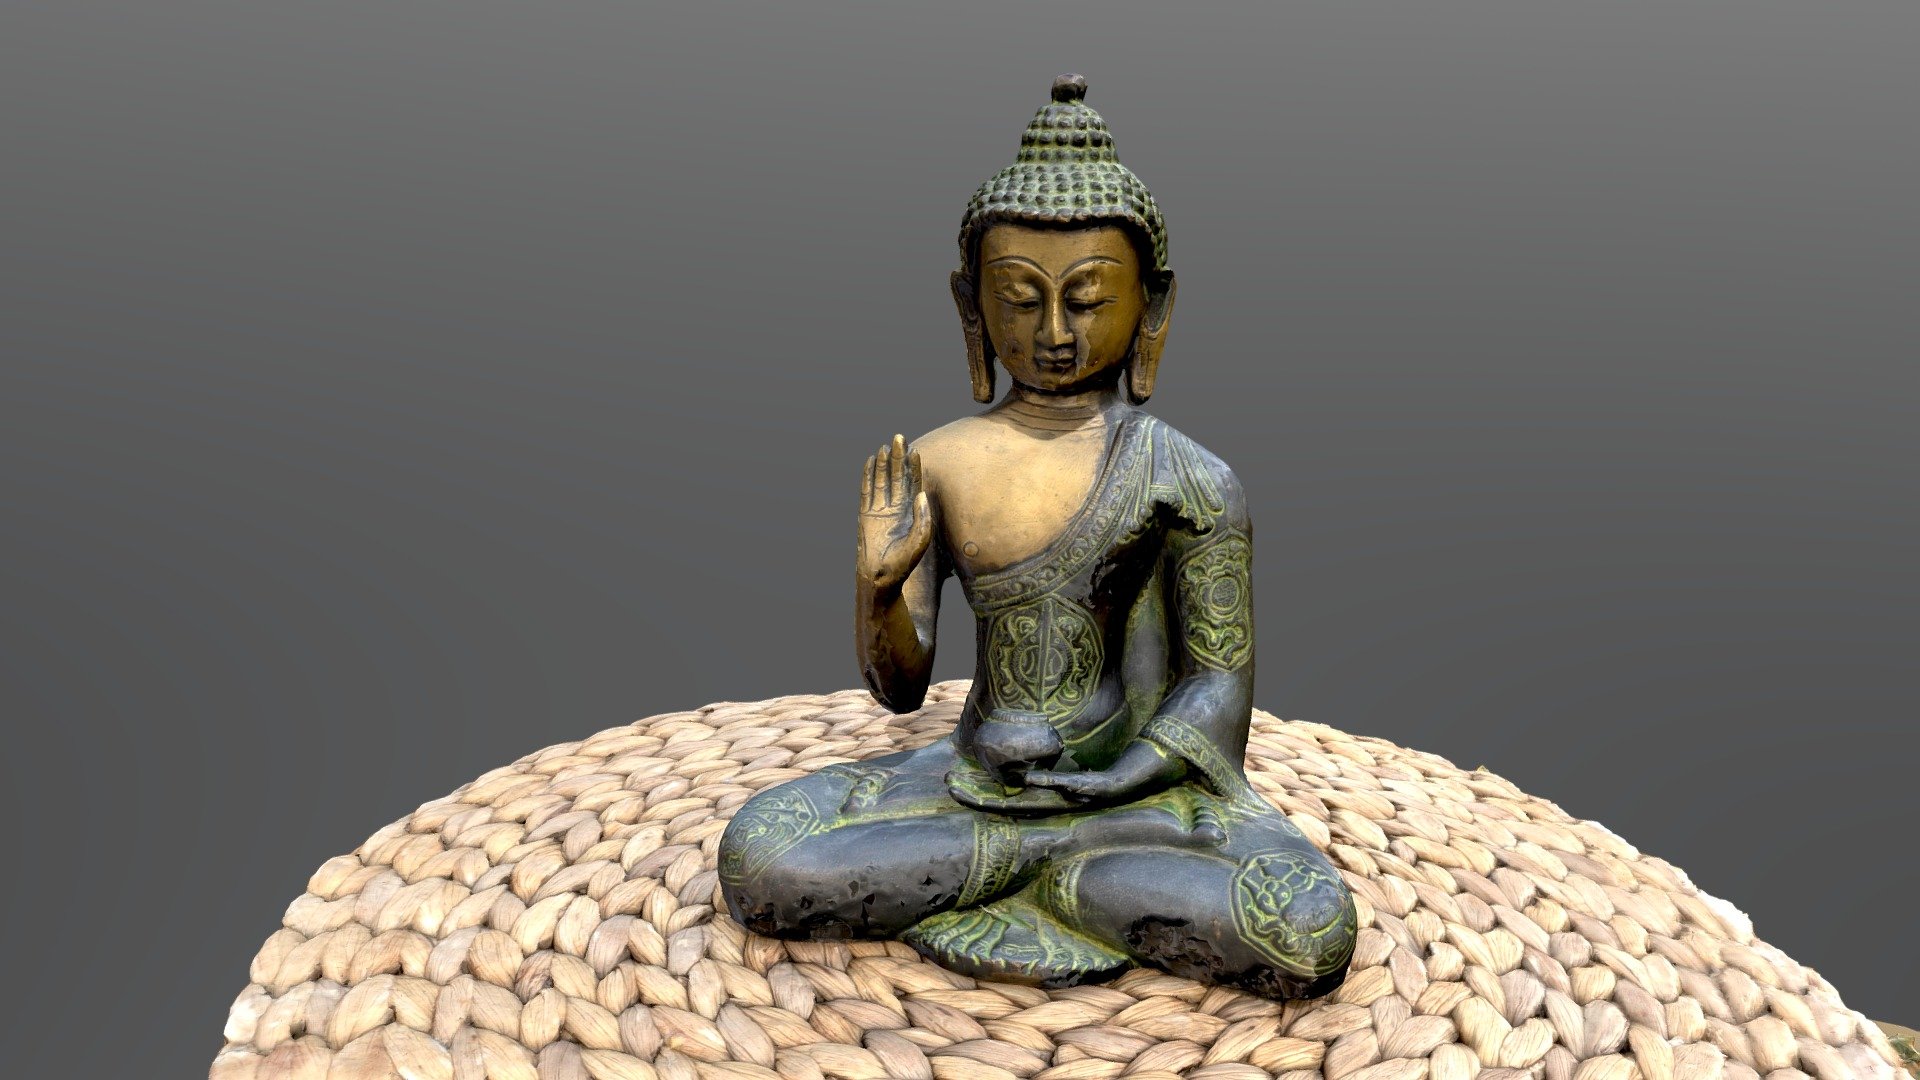 small sitting Buddha statue, metal lotus

photogrametry scan (24MP, 100+) + Reality capture - Buddha statue, sitting metal lotus - Buy Royalty Free 3D model by matousekfoto 3d model